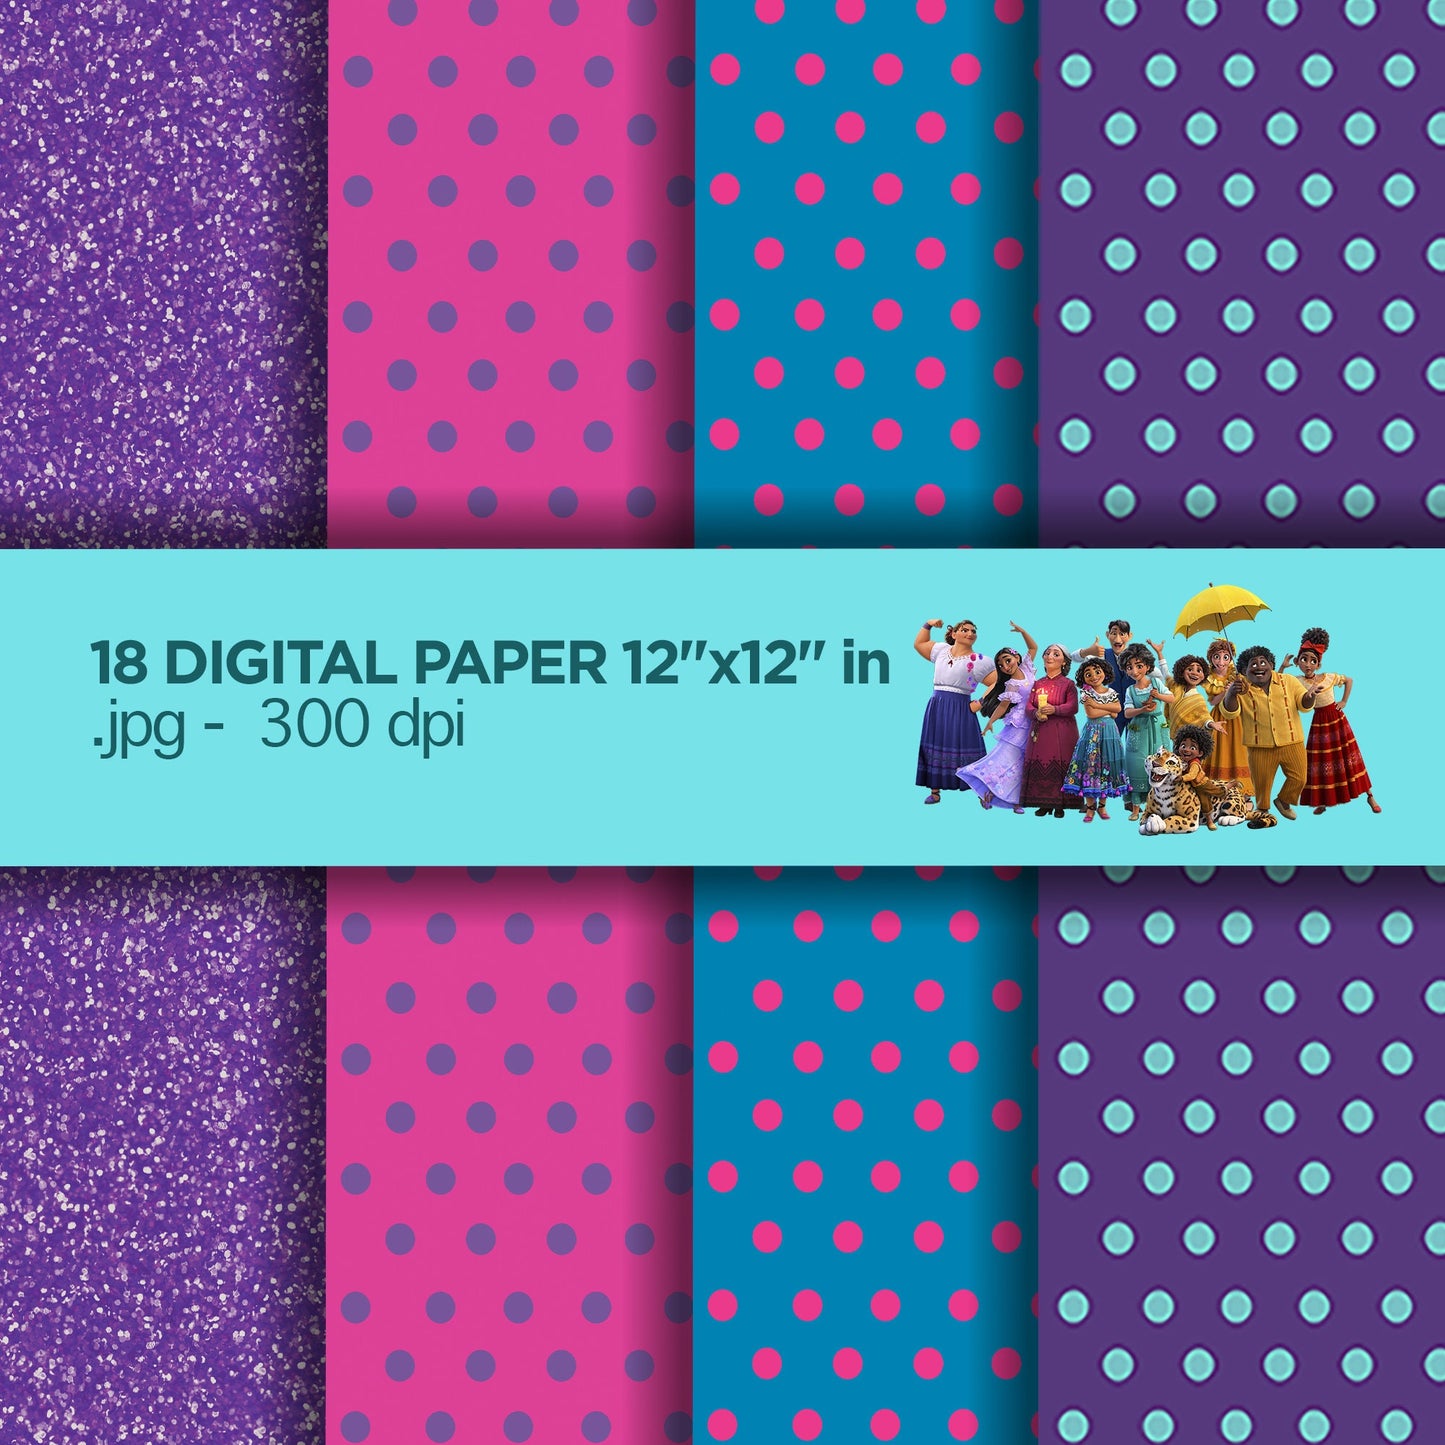 Encanto digital paper